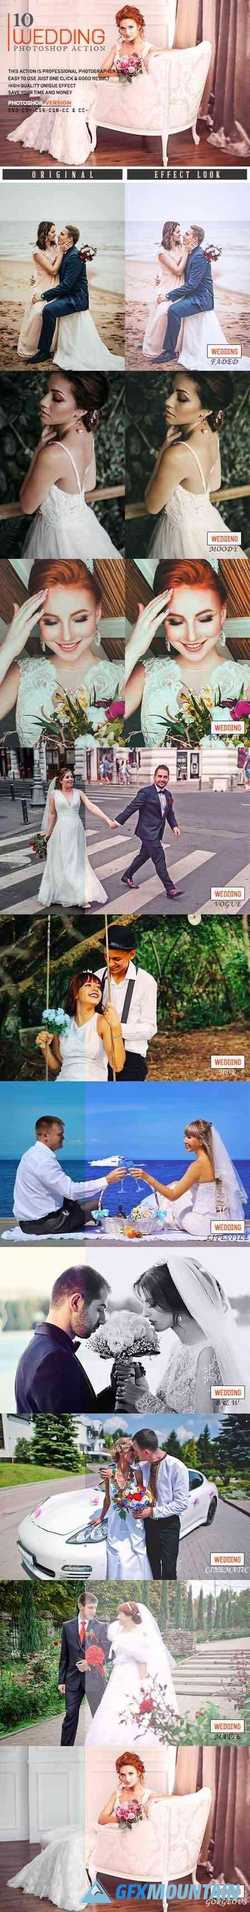 10 Wedding Photoshop Action 23216080